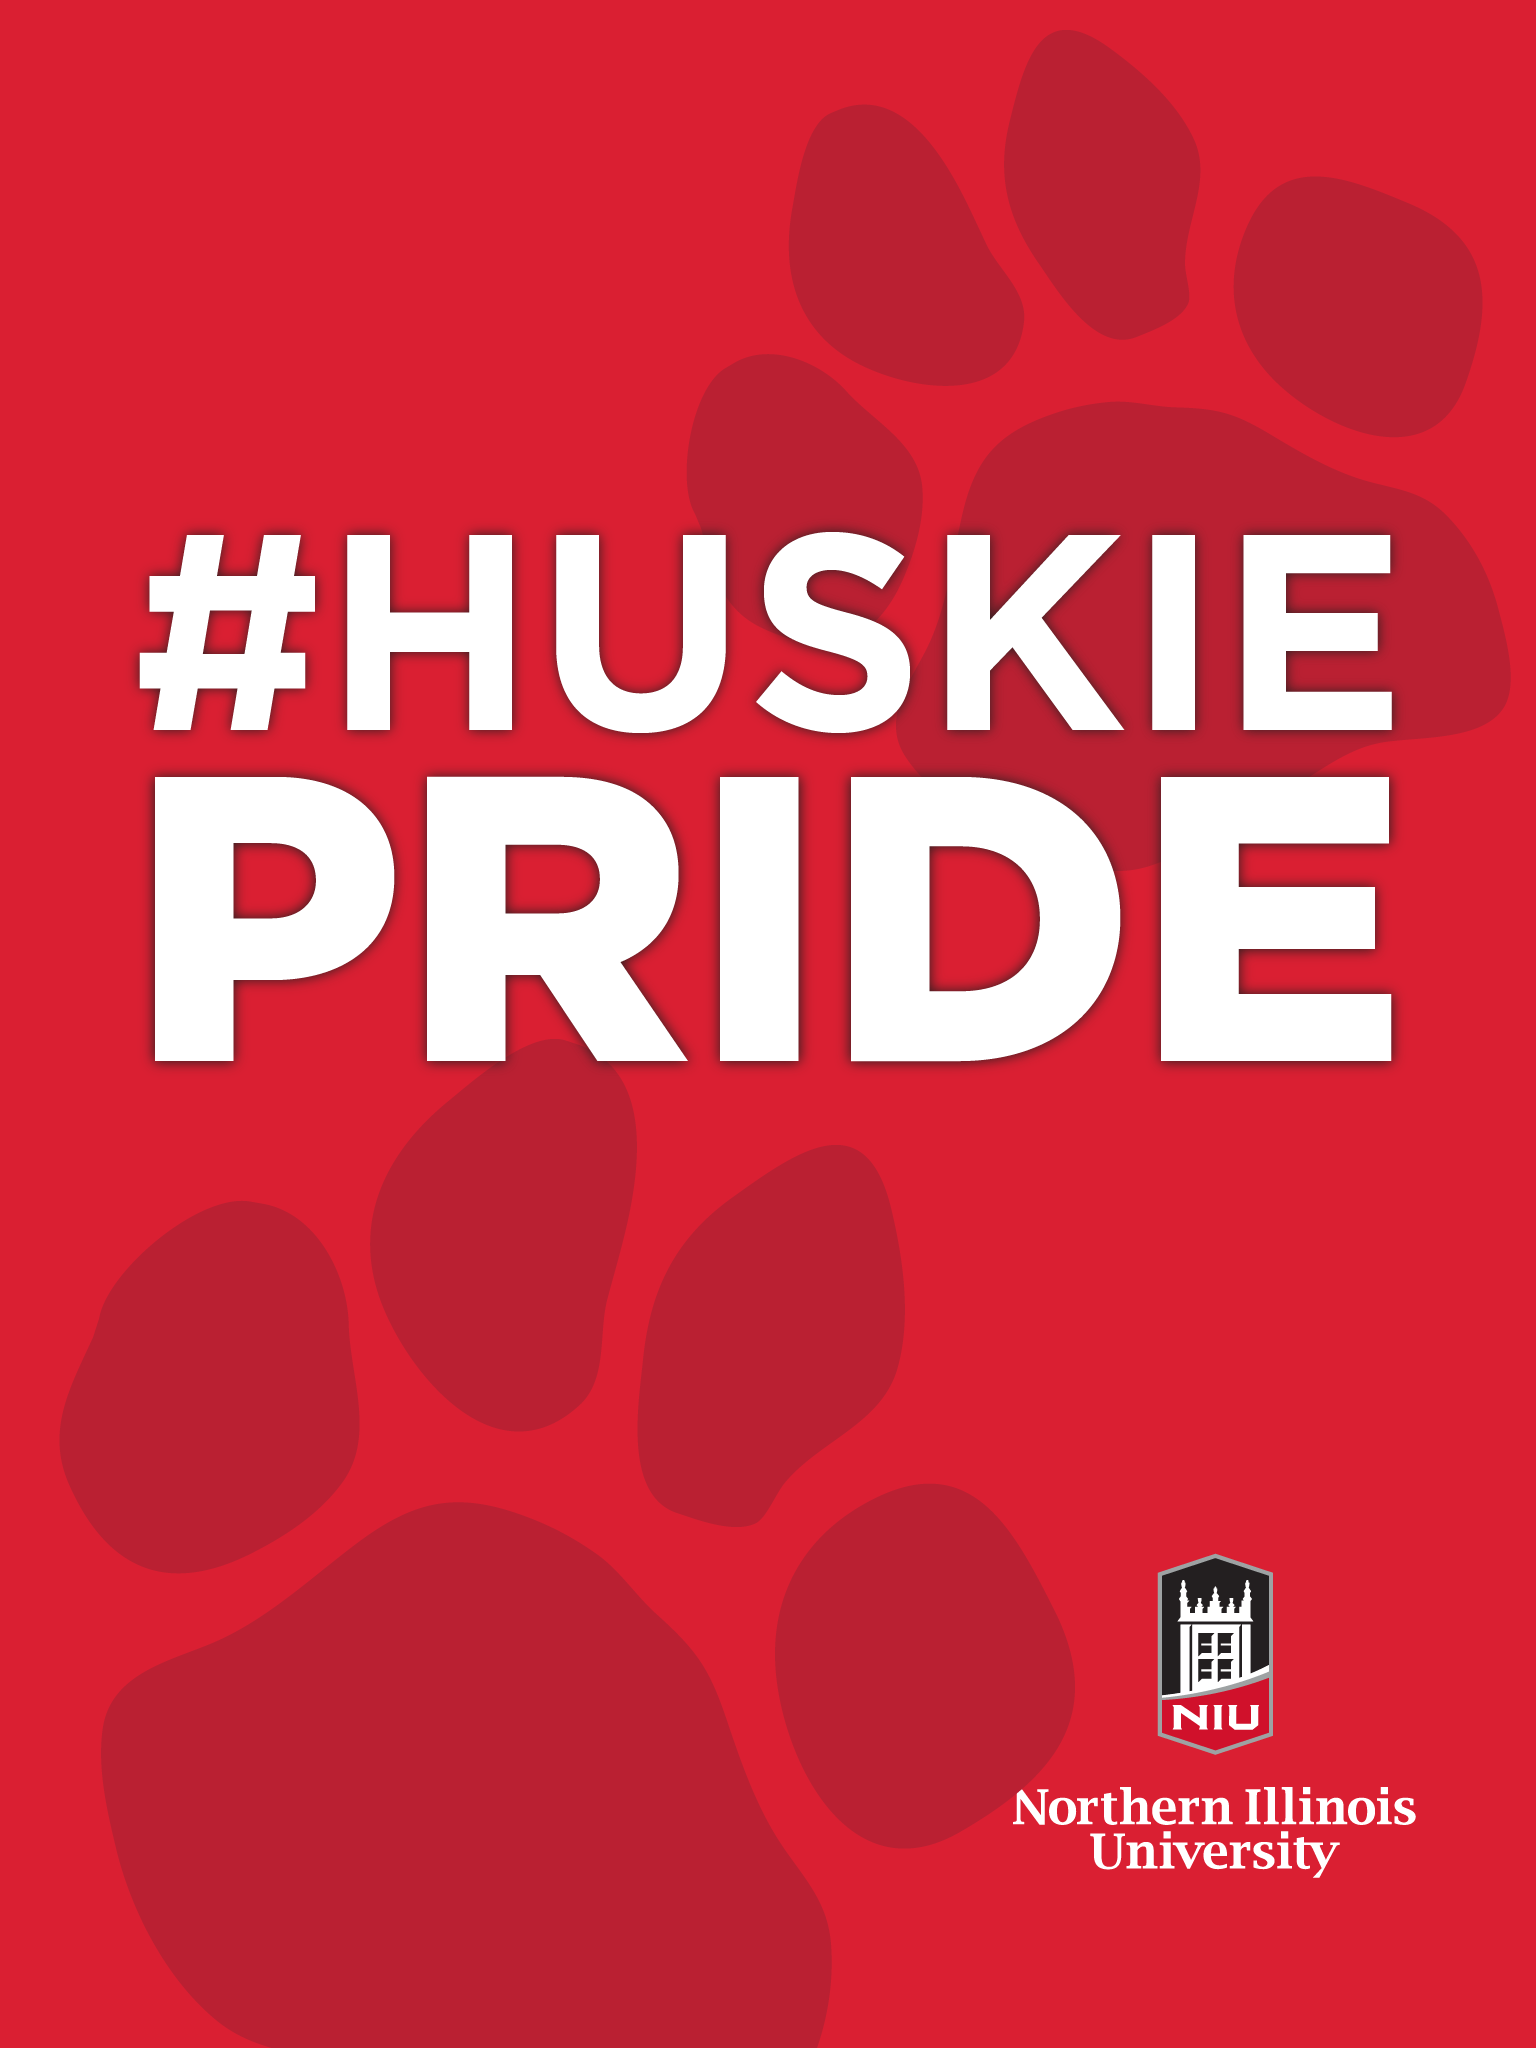 Huskie Pride S Niu Northern Illinois University